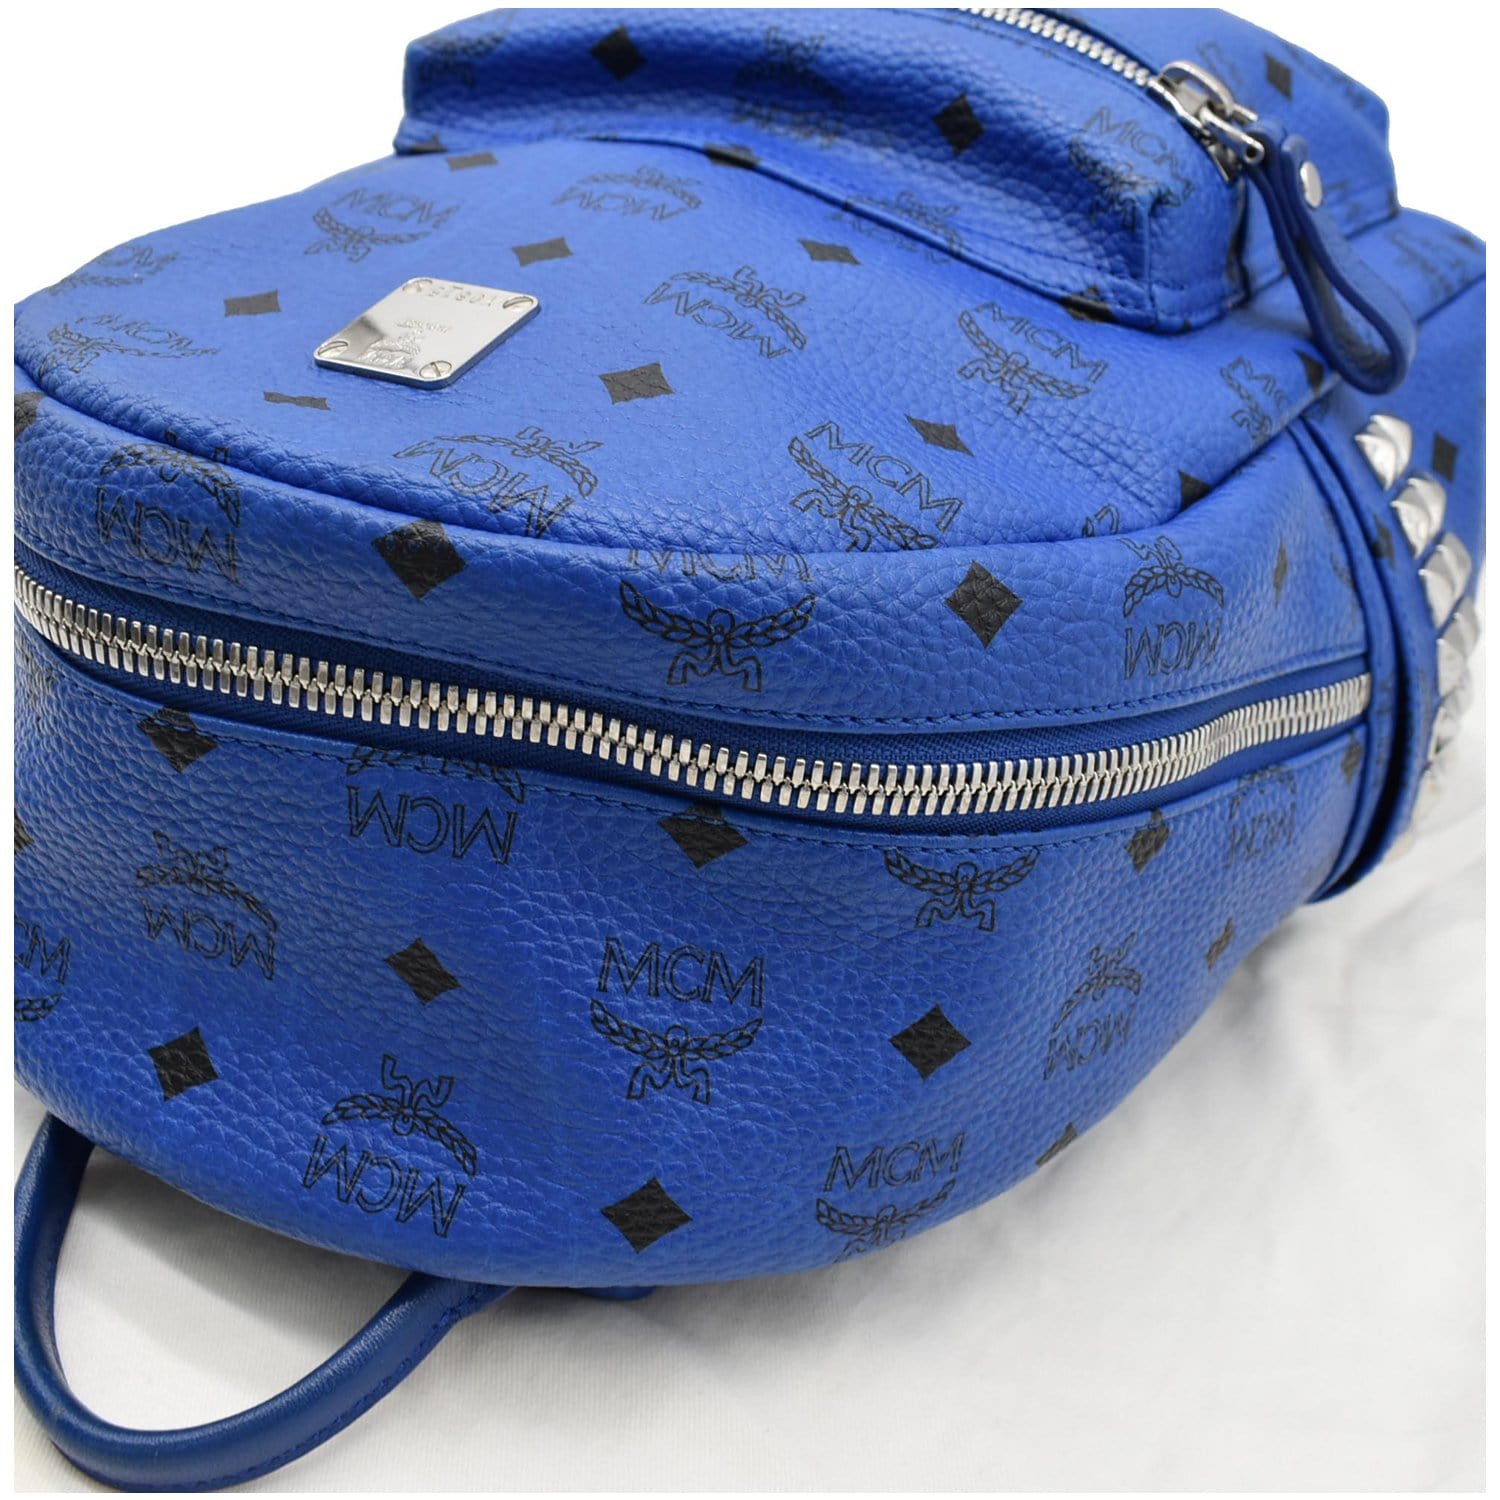 MCM Visetos Studded Colorblock Mini Stark Brock Backpack Blue 702896